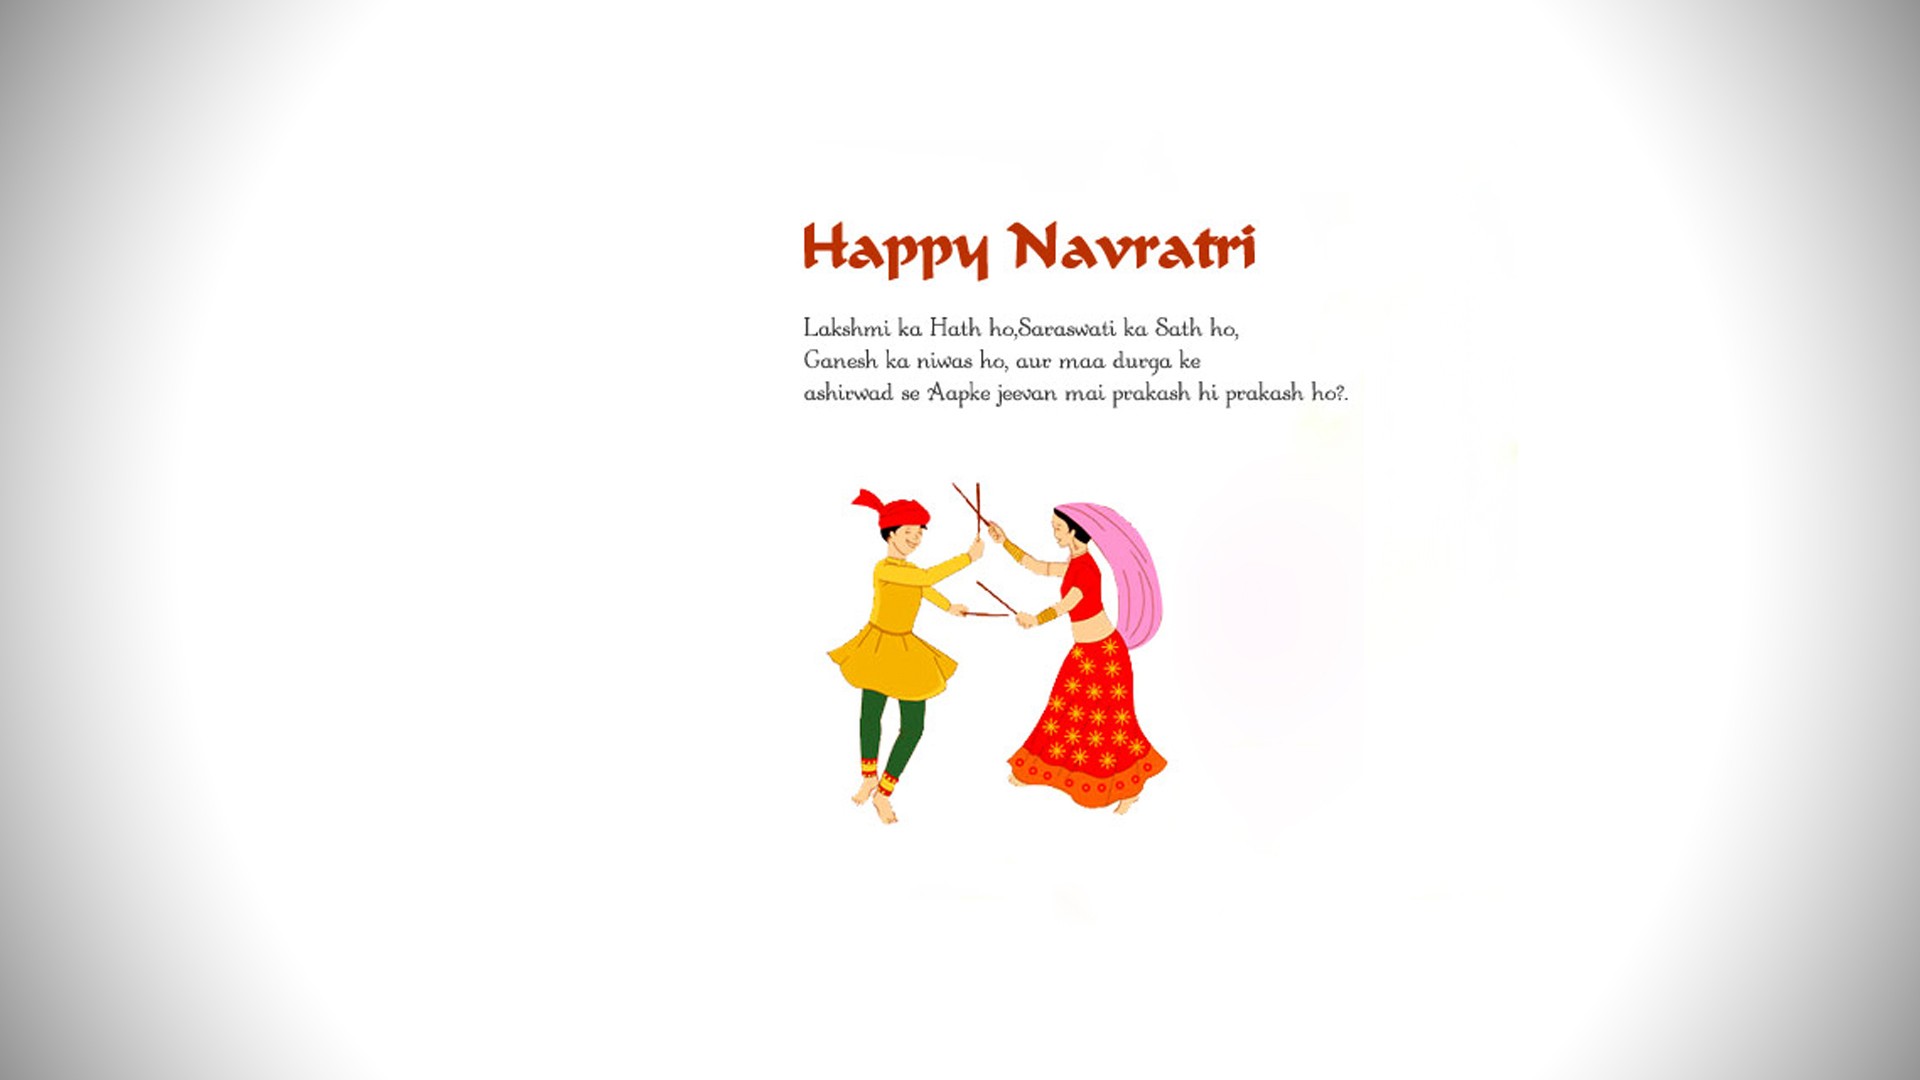 Happy Navratri couple playing dandiya picture